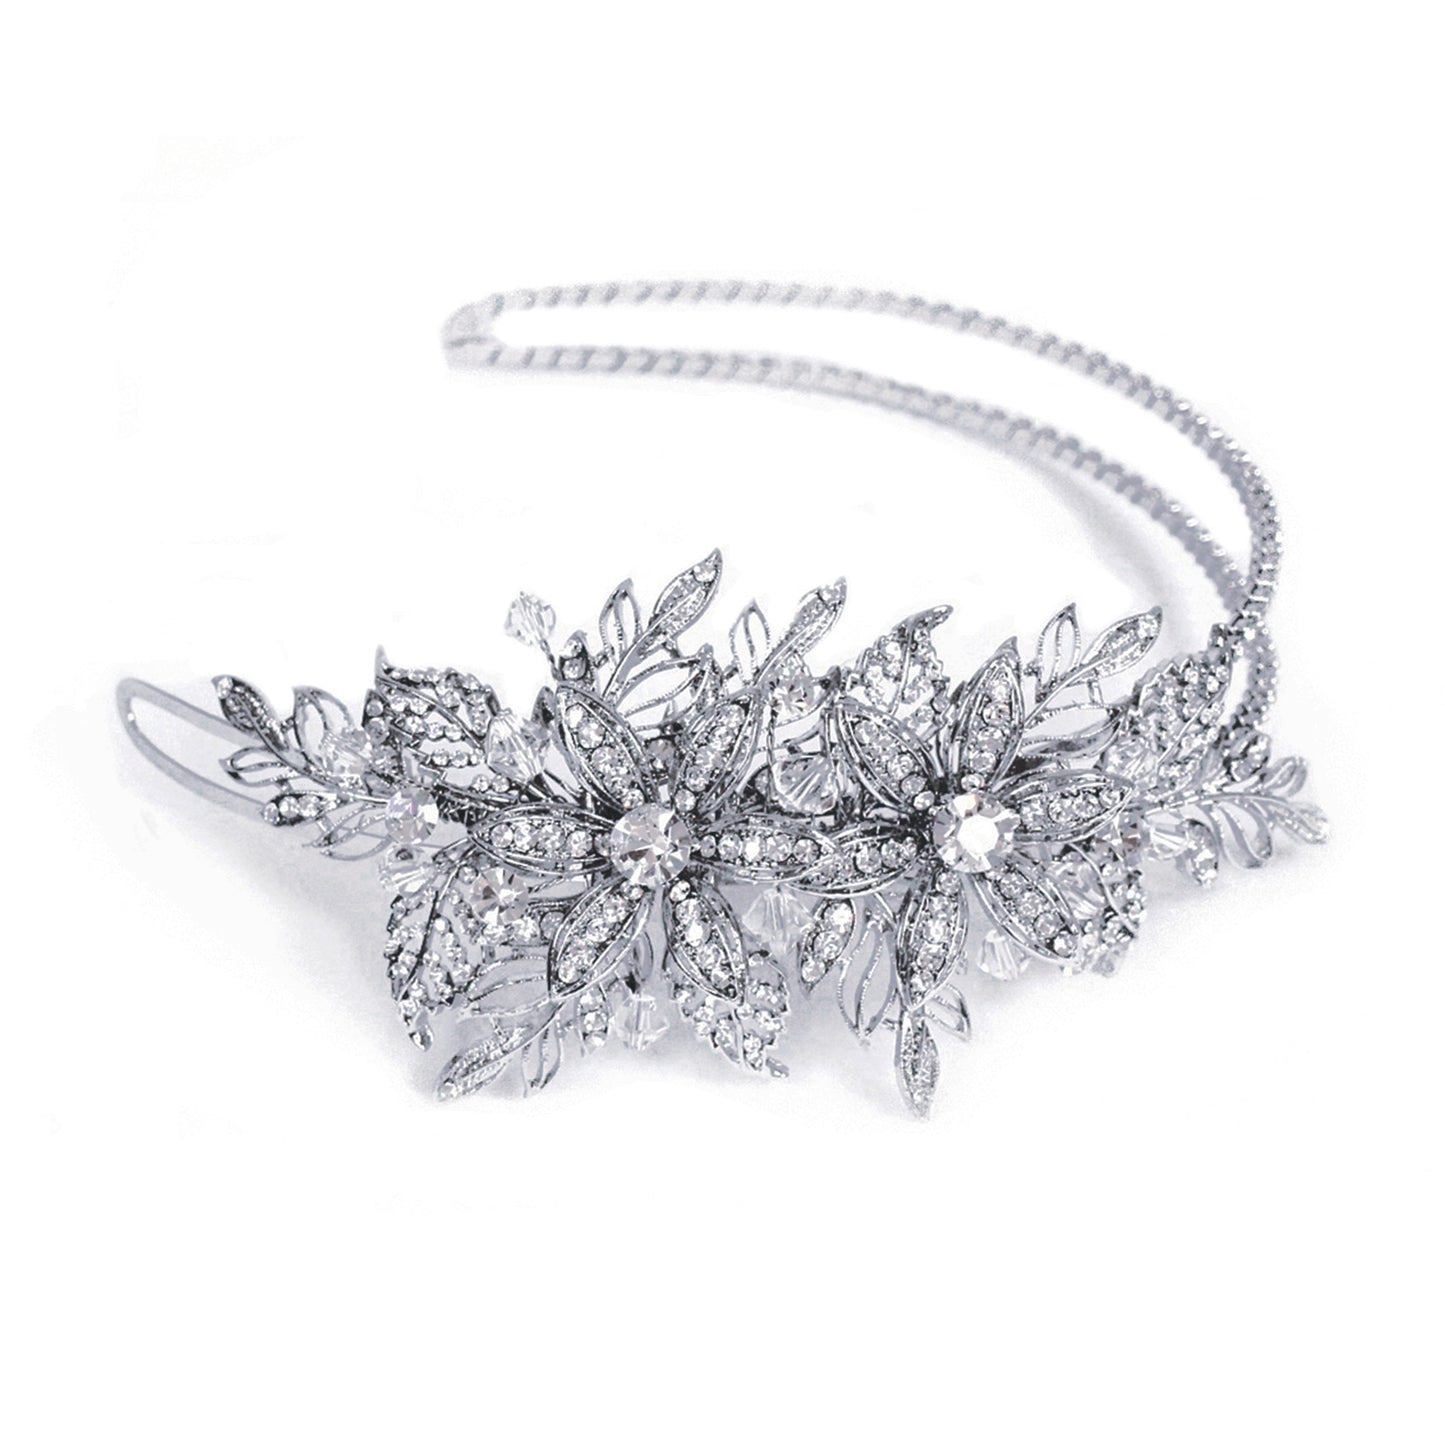 Jessie - Rhodium Crystal Romantic Headpiece